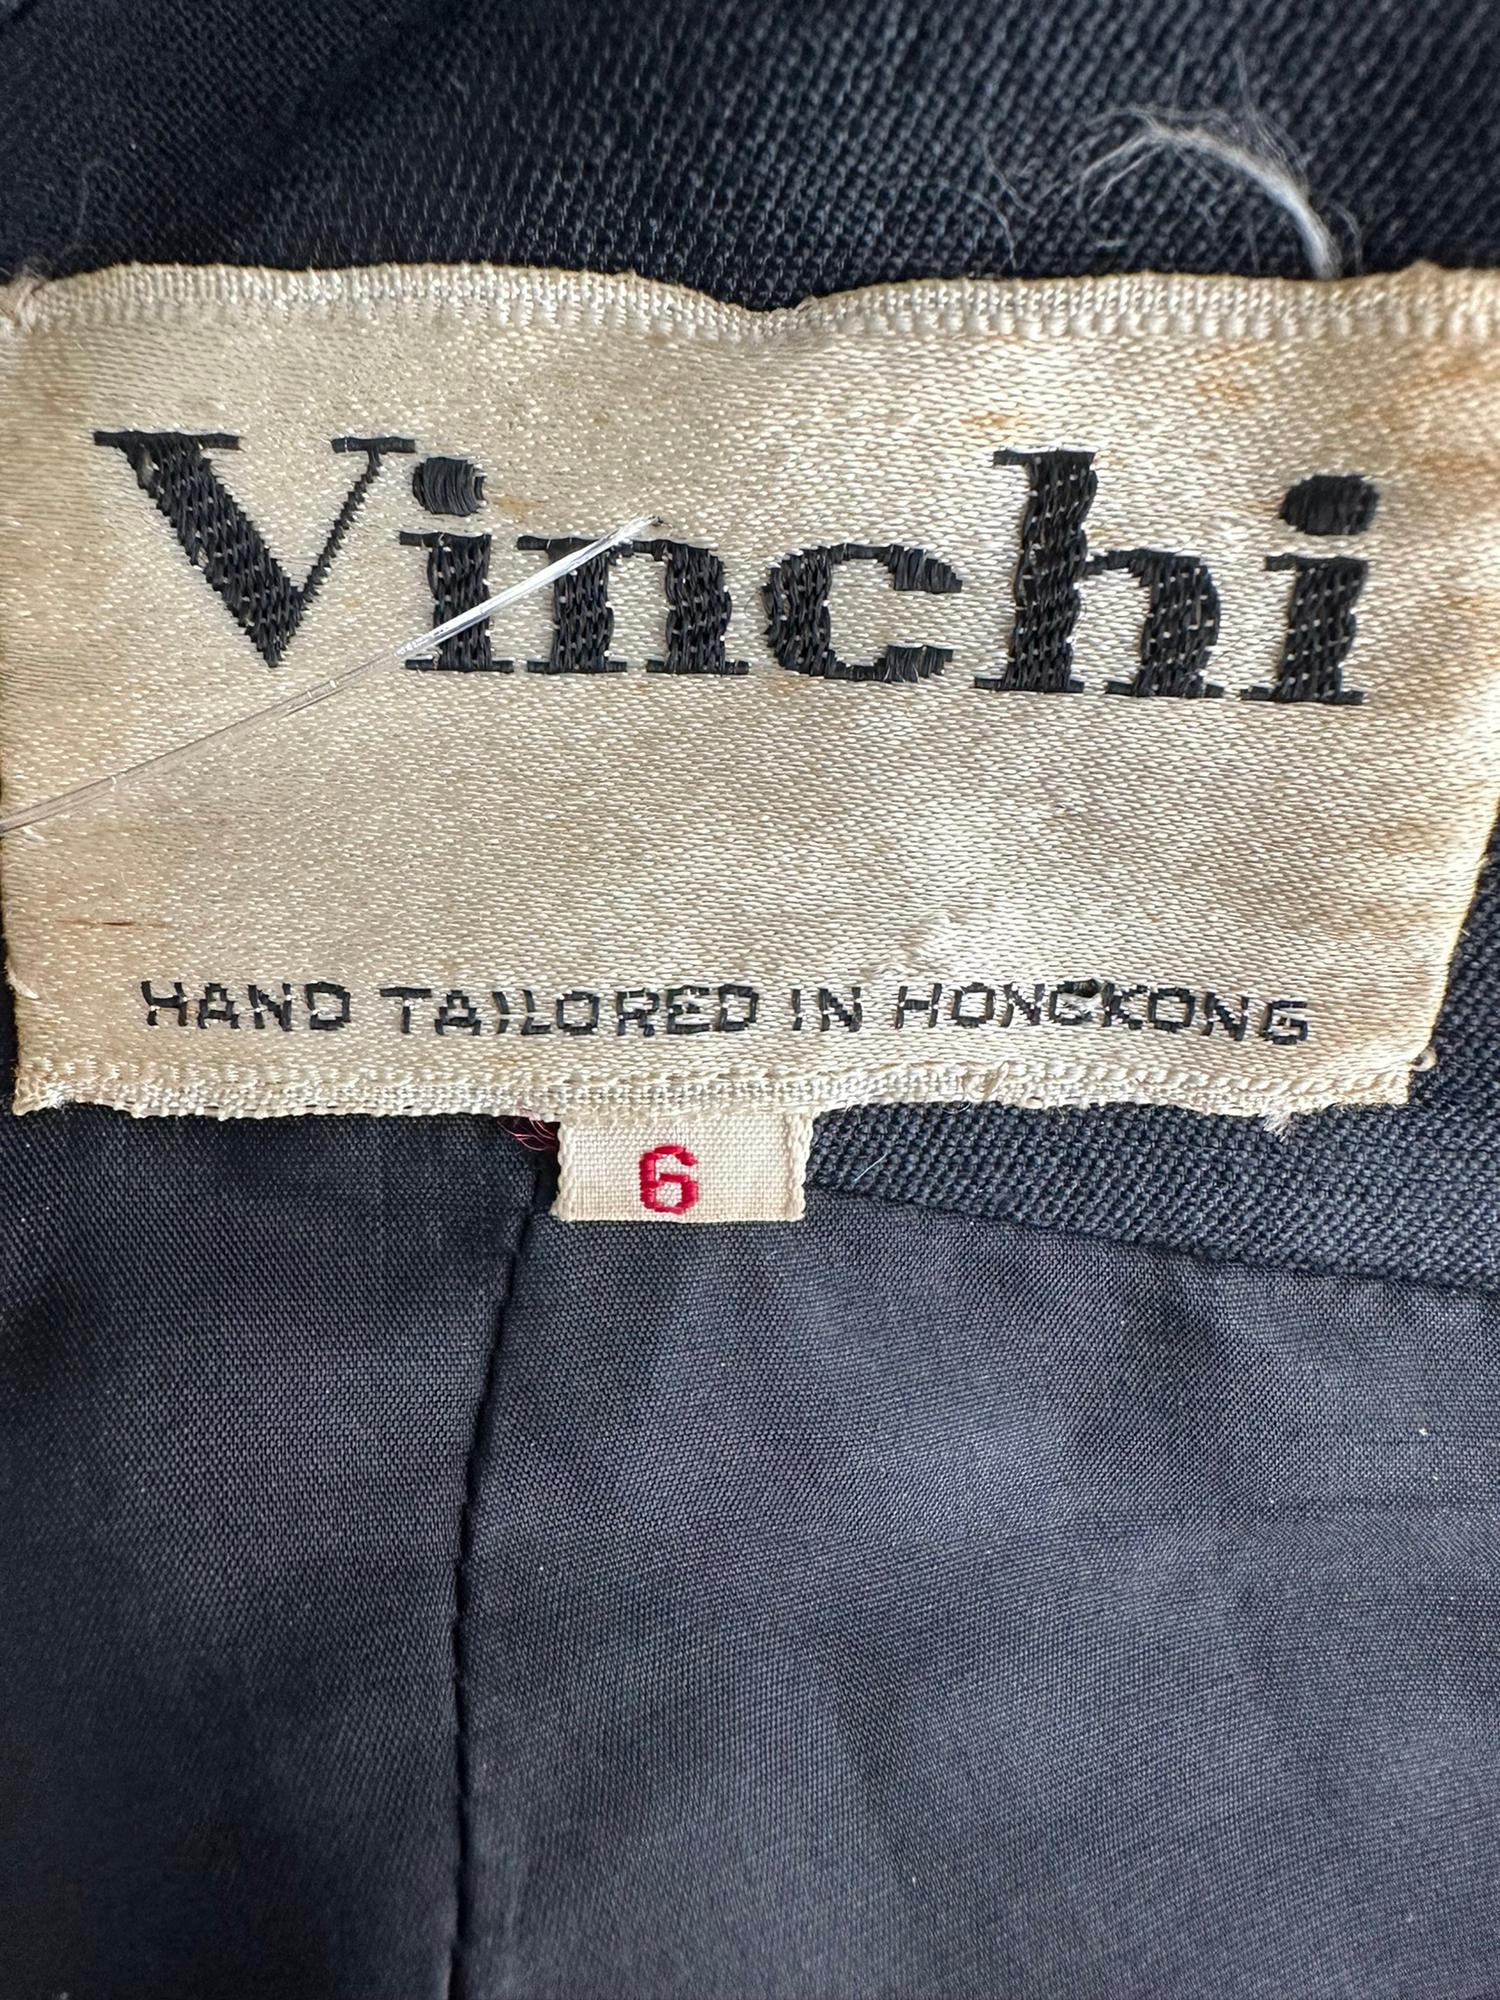 Vinchi Demi Couture Black Silk Hand Rolled Petal Evening Dress 1960s Hong Kong For Sale 11